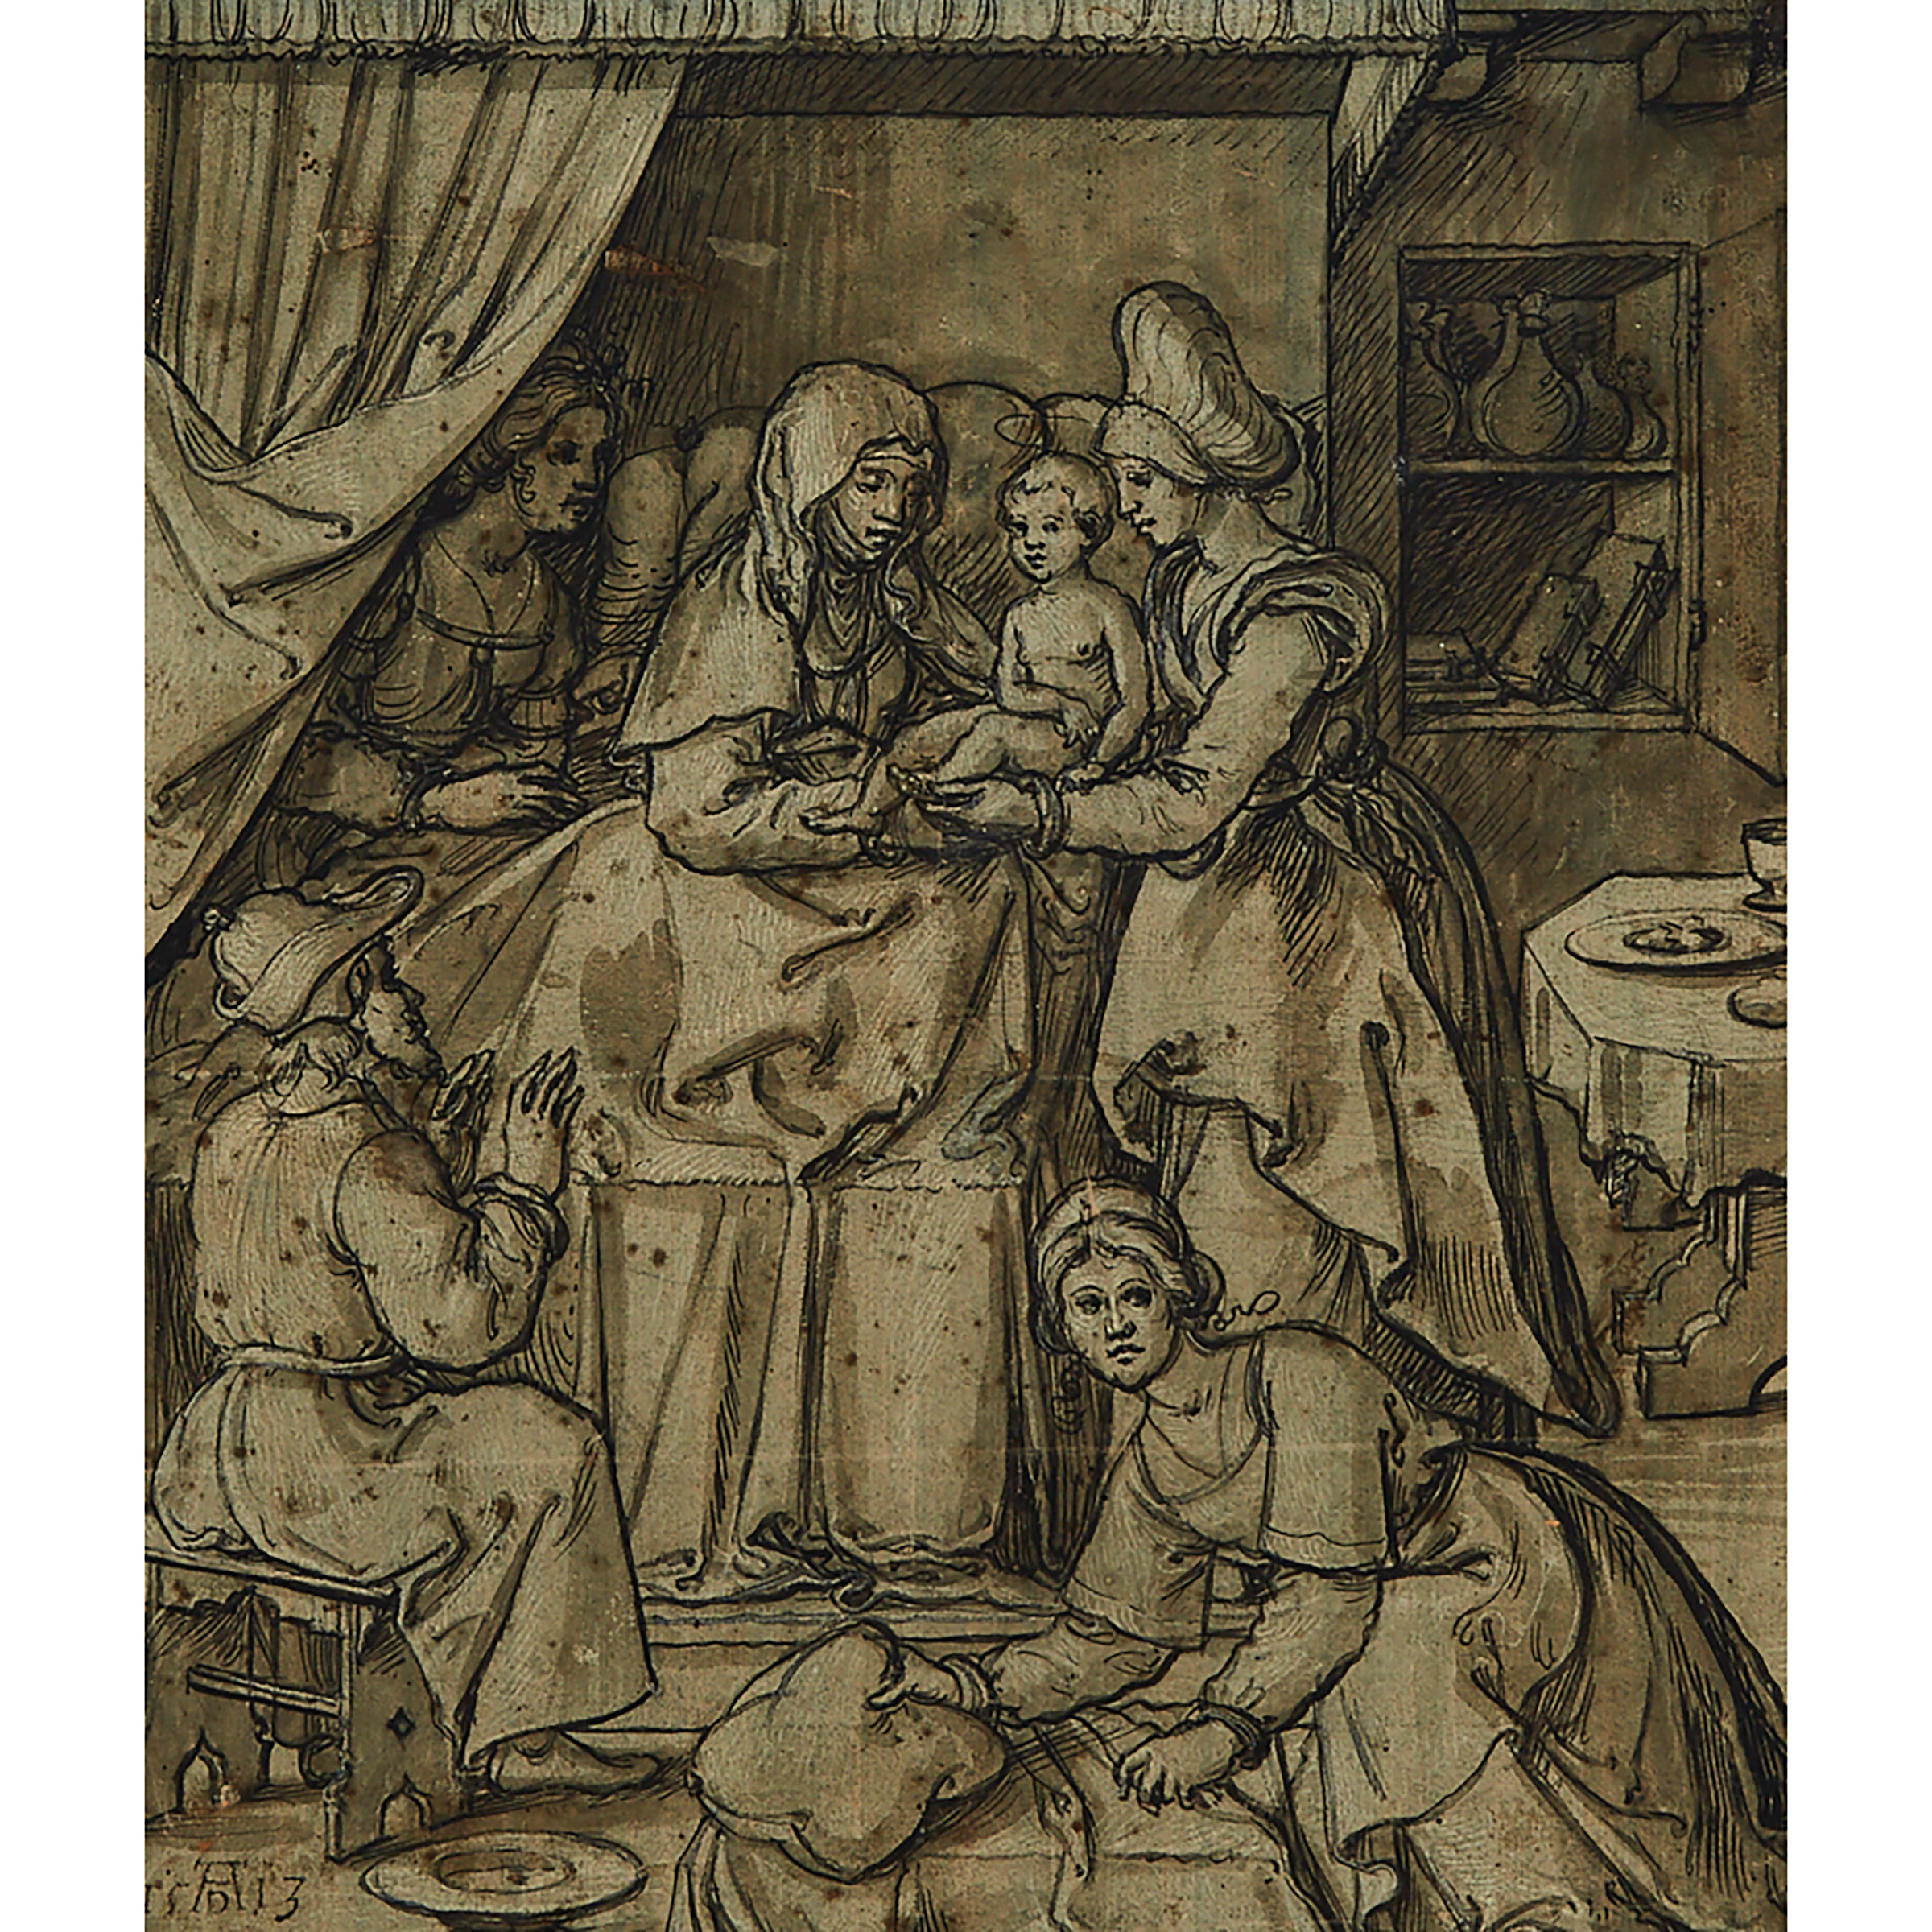 Attributed to Jan Swart van Groningen (circa 1500- d. circa 1560)